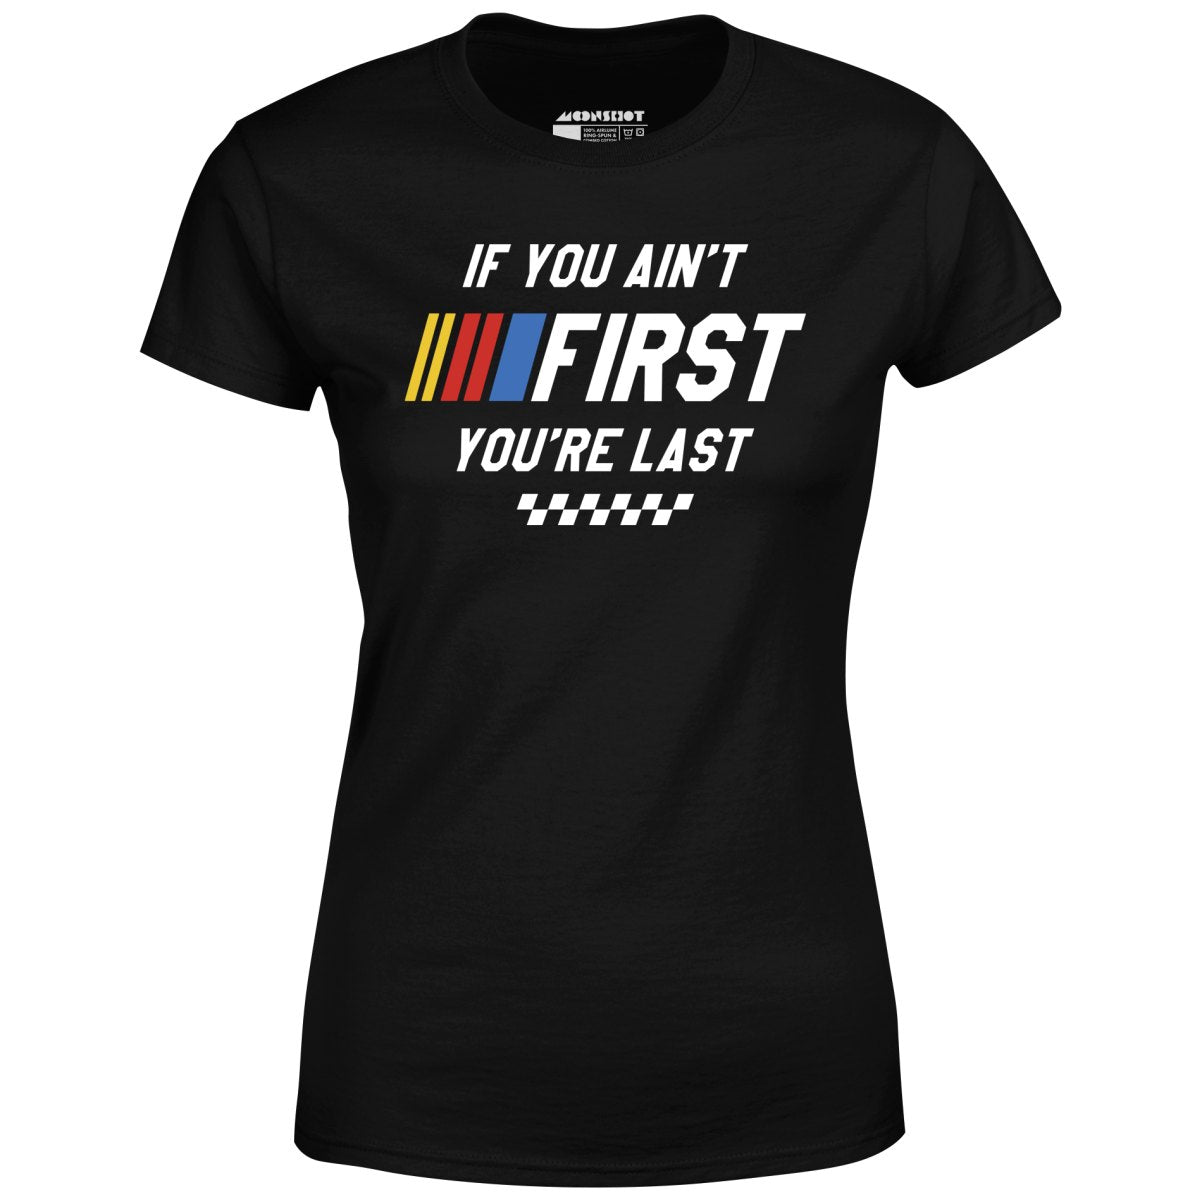 If You Ain't First You're Last - Talladega Nights - Women's T-Shirt